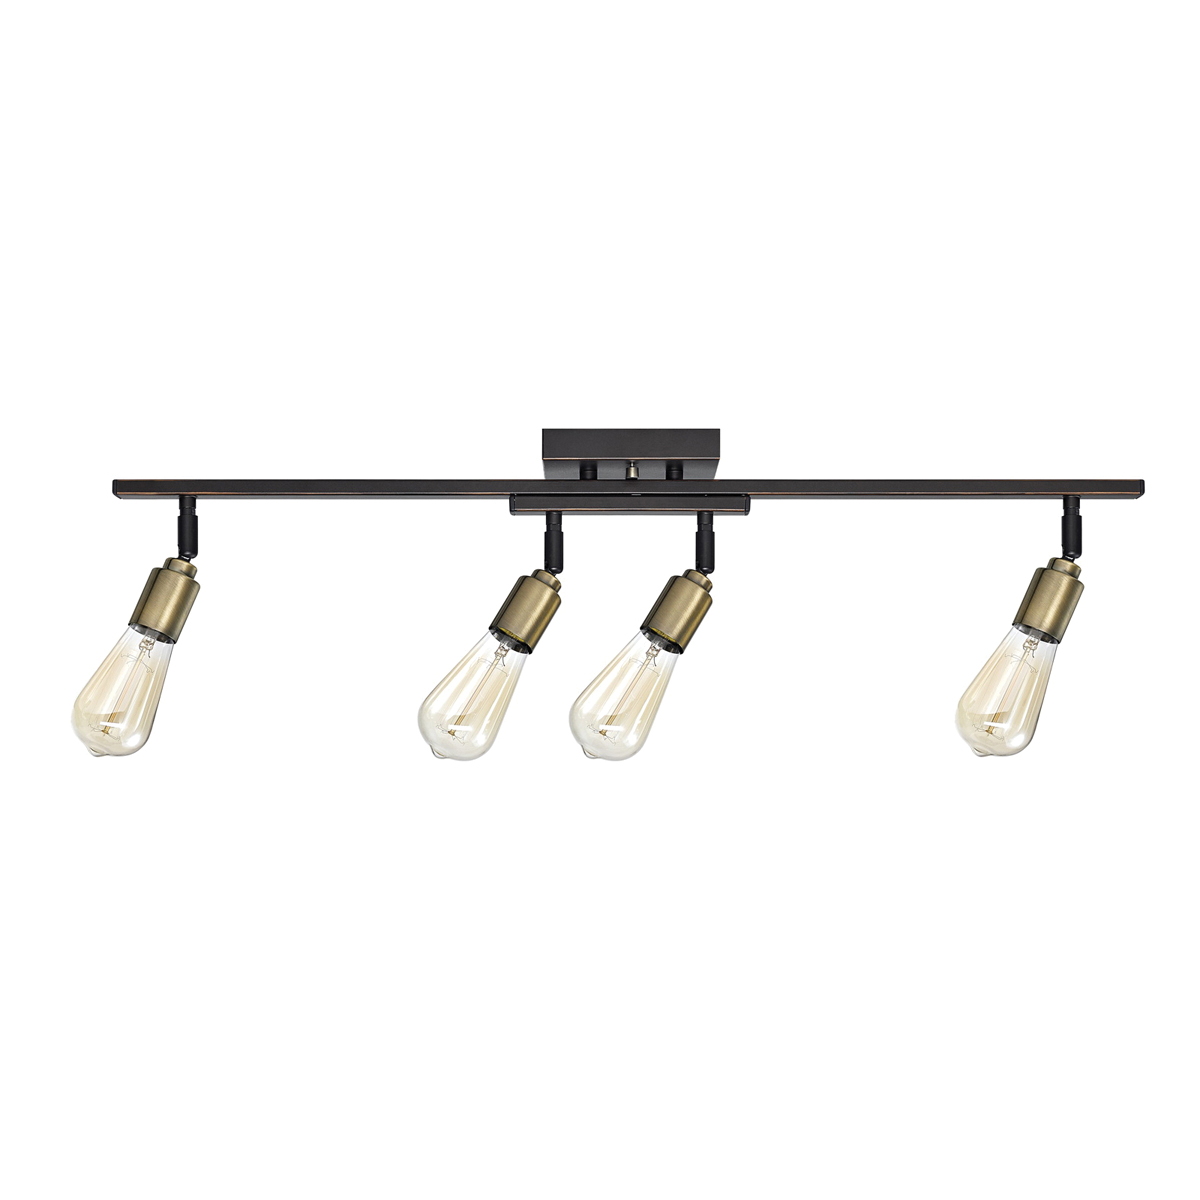 globe Bryce Series 59035 Standard Linear Track Lighting Kit, 120 V, 4-Lamp, Vintage Lamp, 245 Lumens - 1